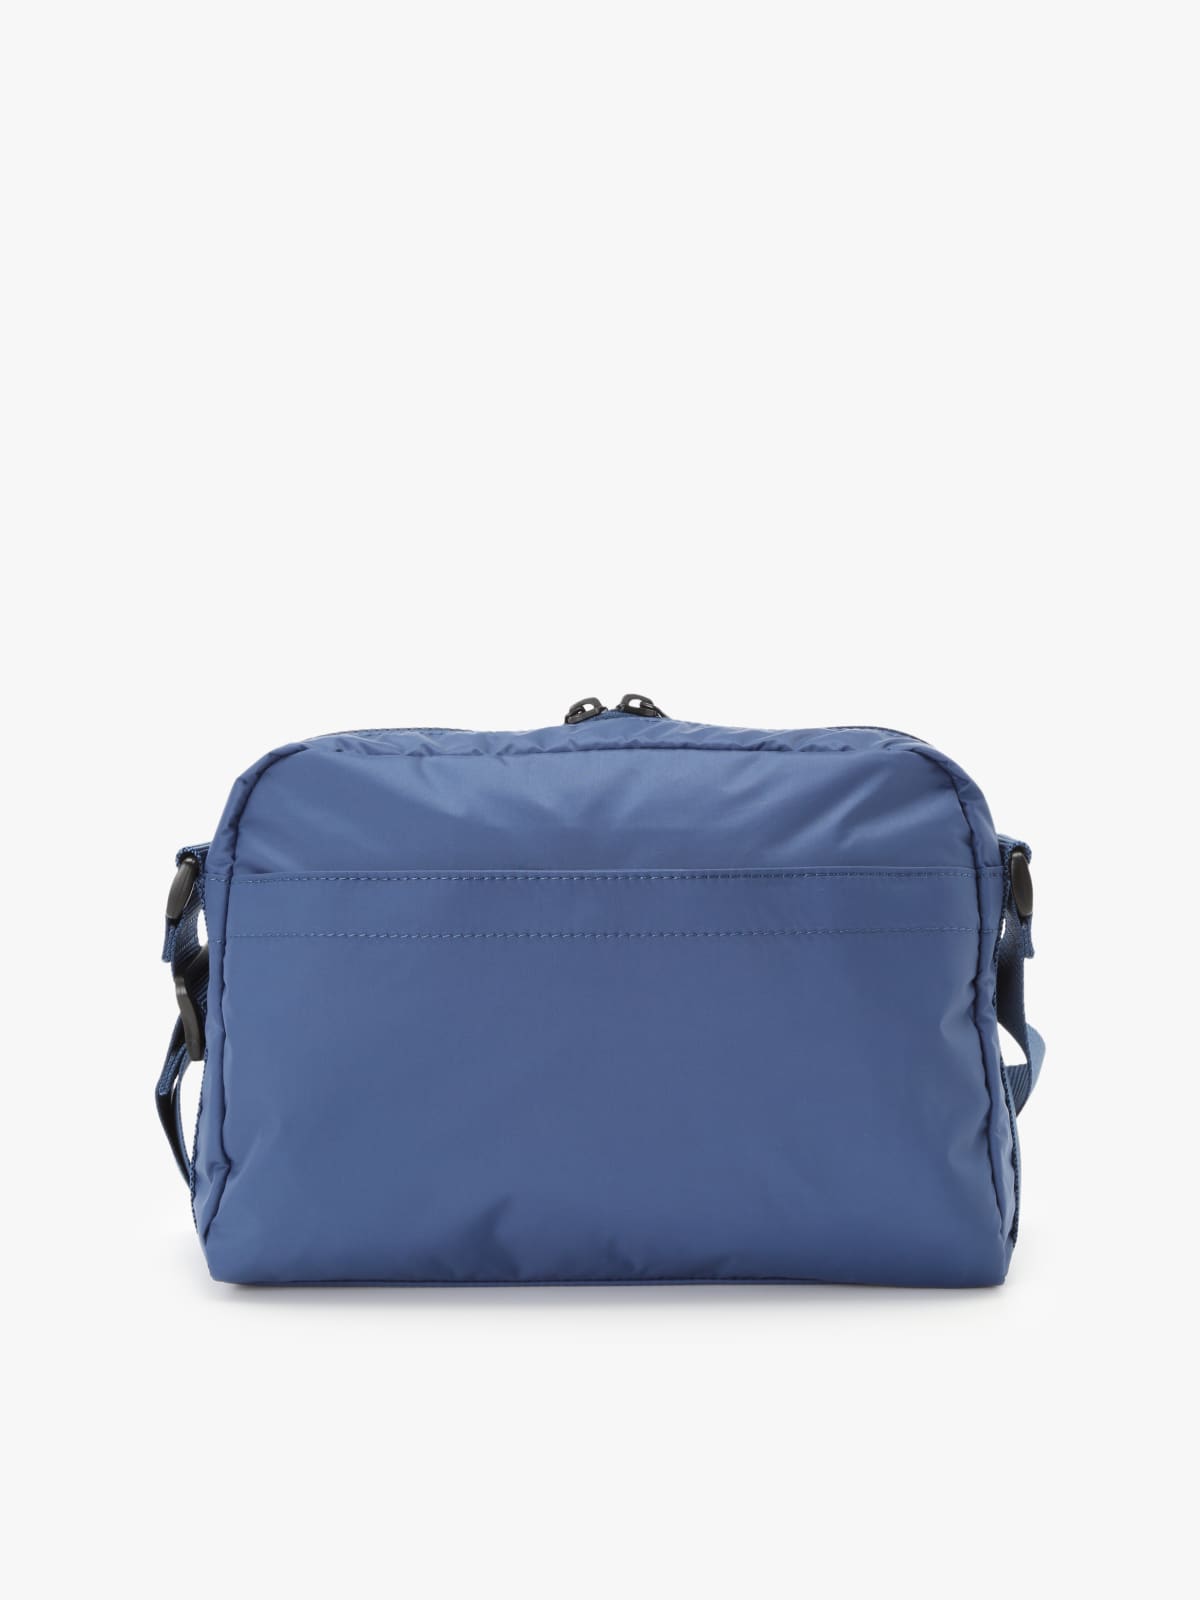 blue nylon bag